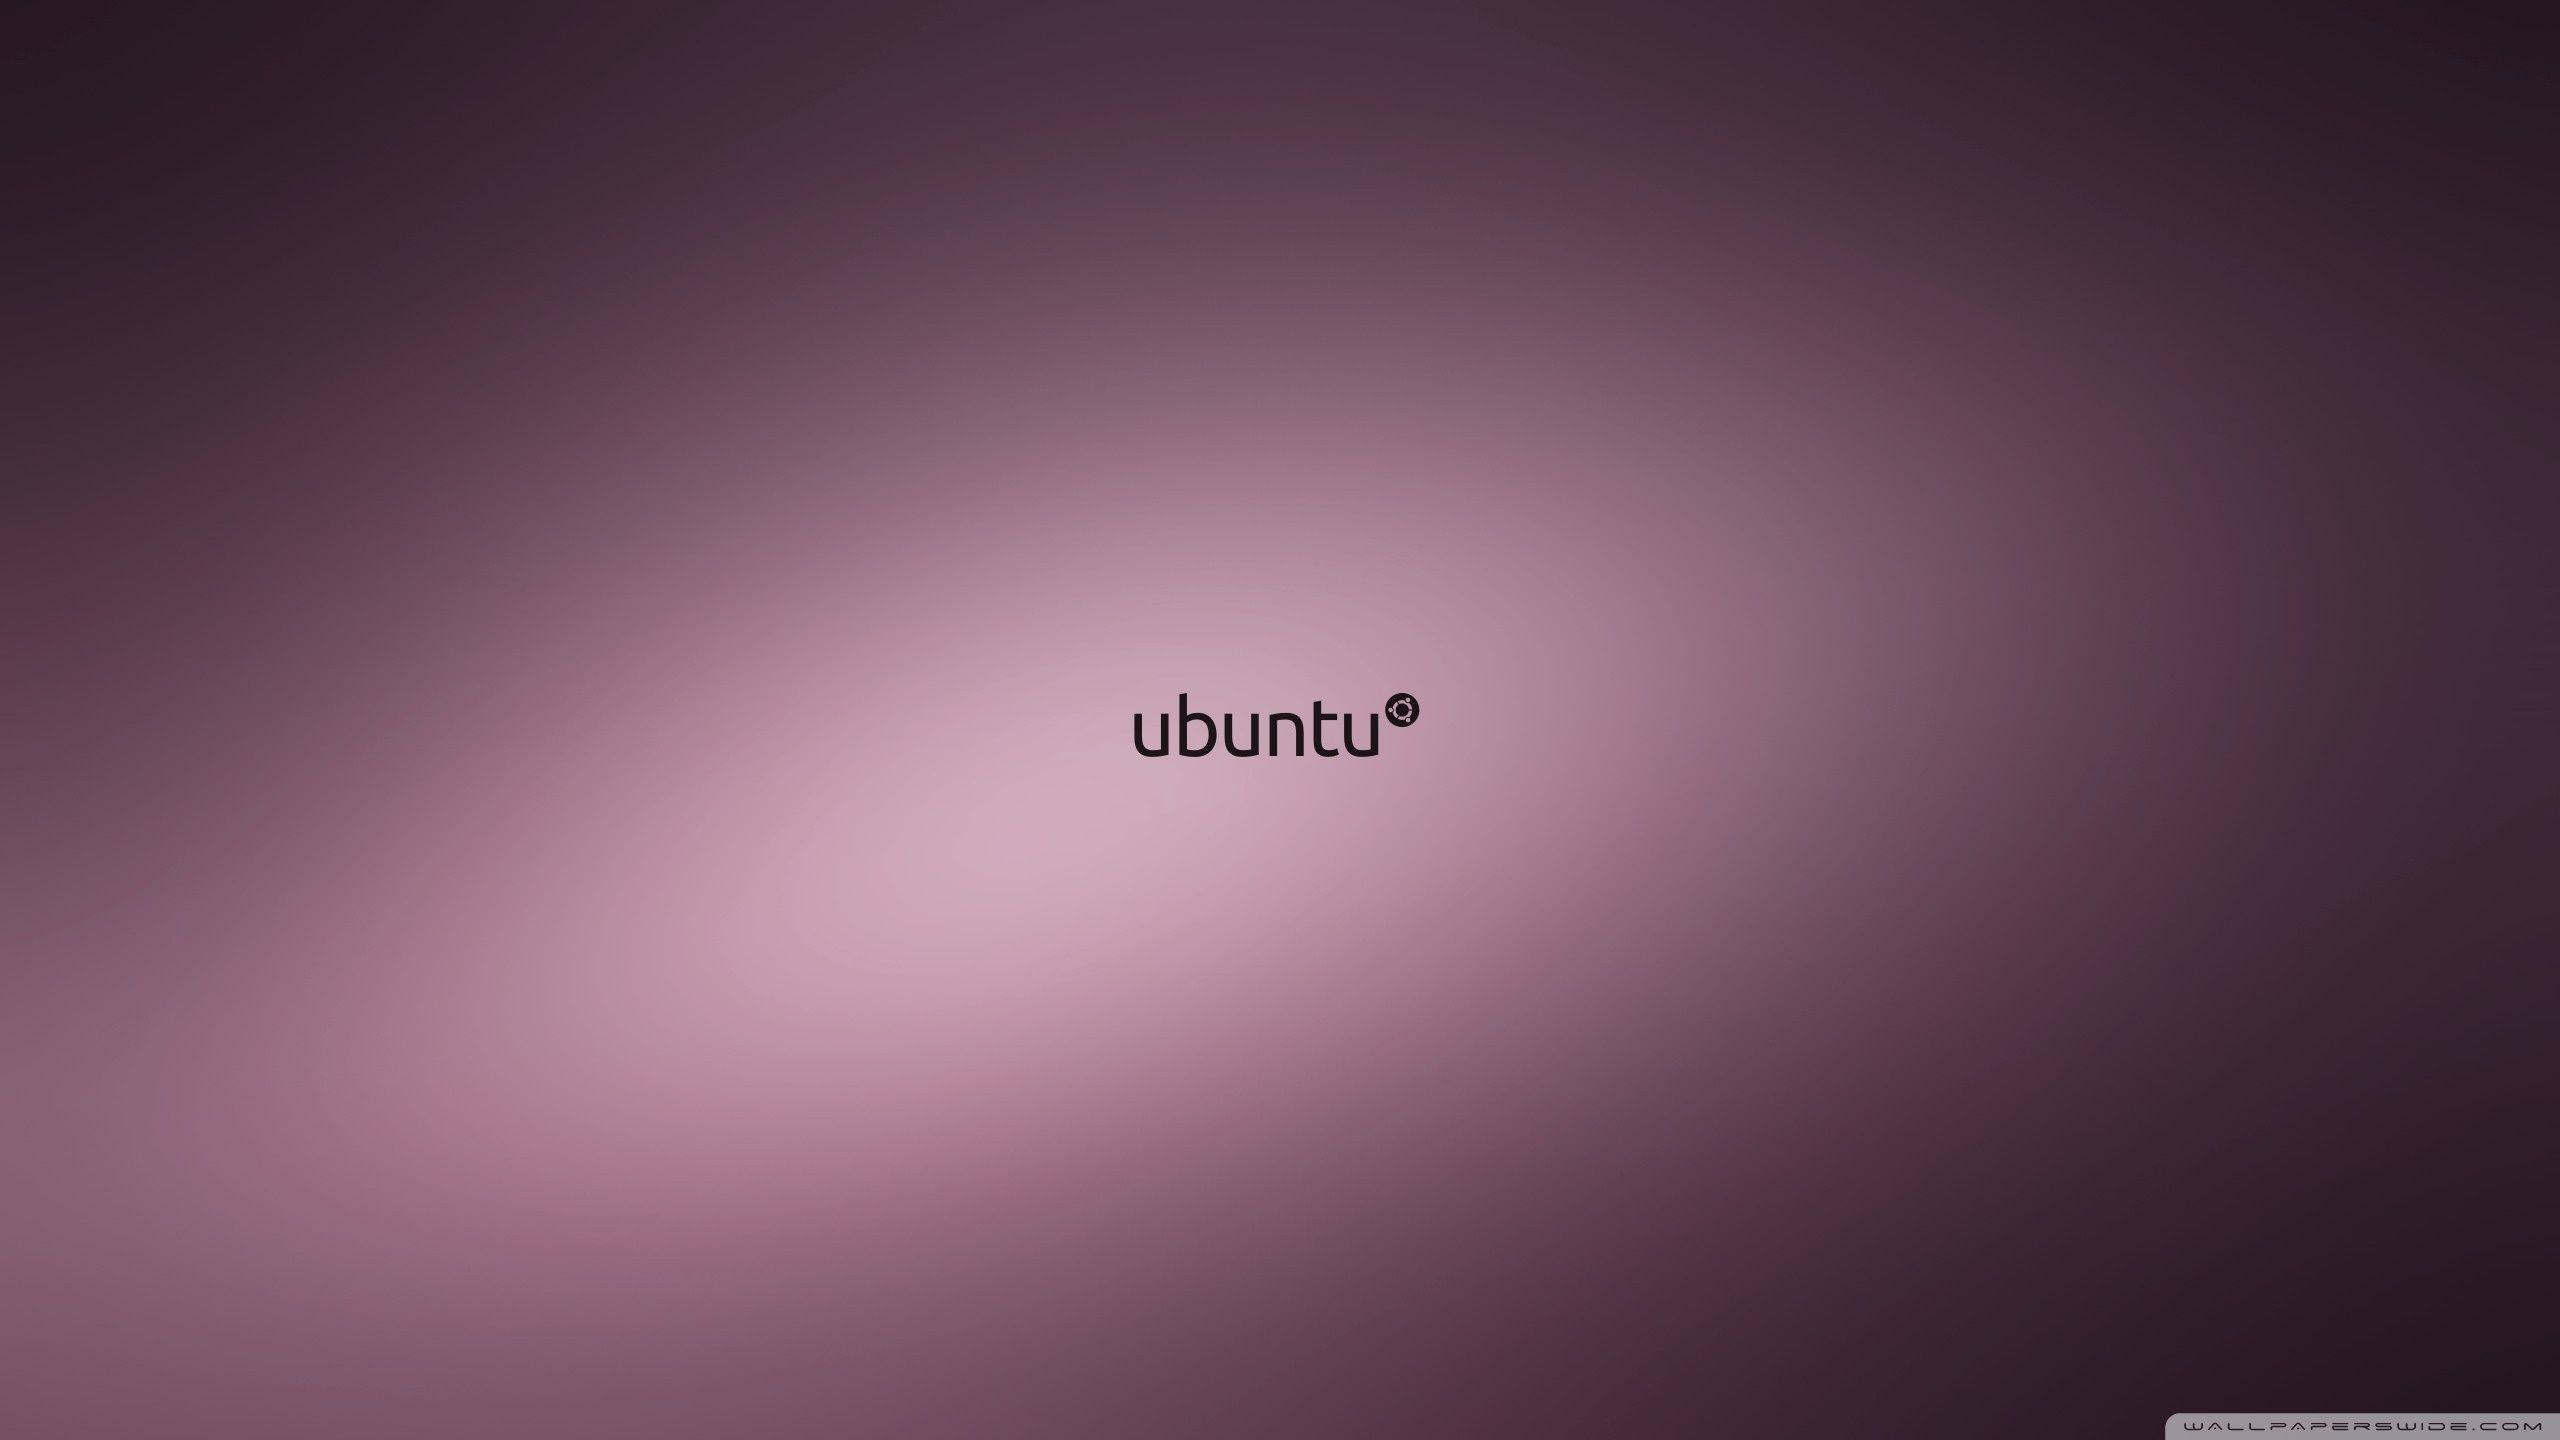 Ubuntu Minimalist Wallpaper Free Ubuntu Minimalist Background